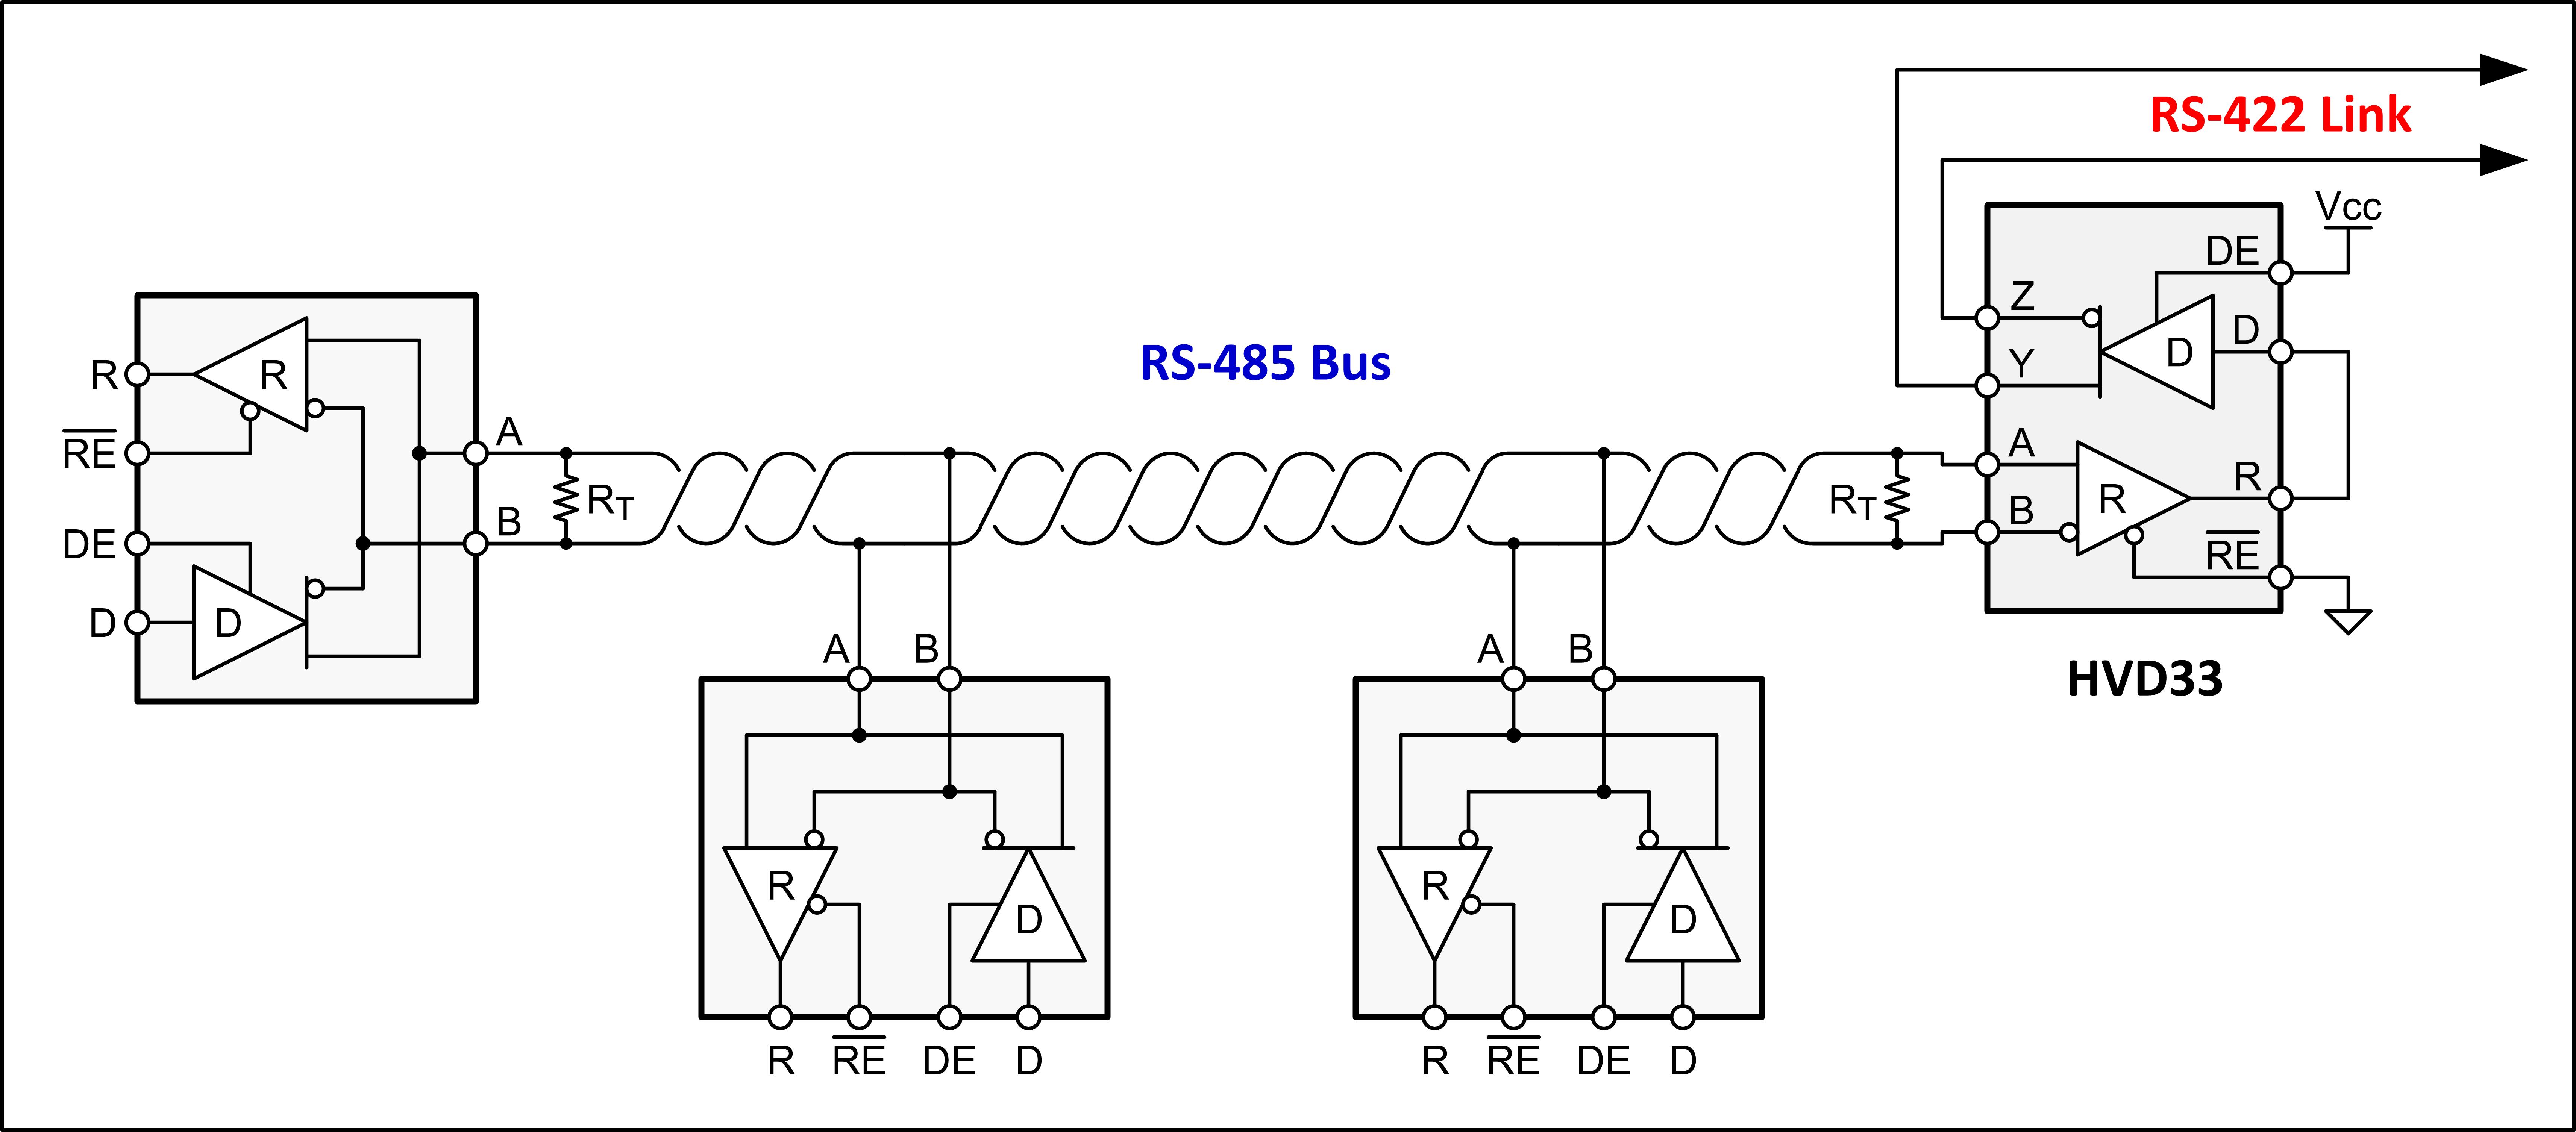 [DIAGRAM] Ethernet Rs 485 2wire Pinout Diagram - MYDIAGRAM.ONLINE